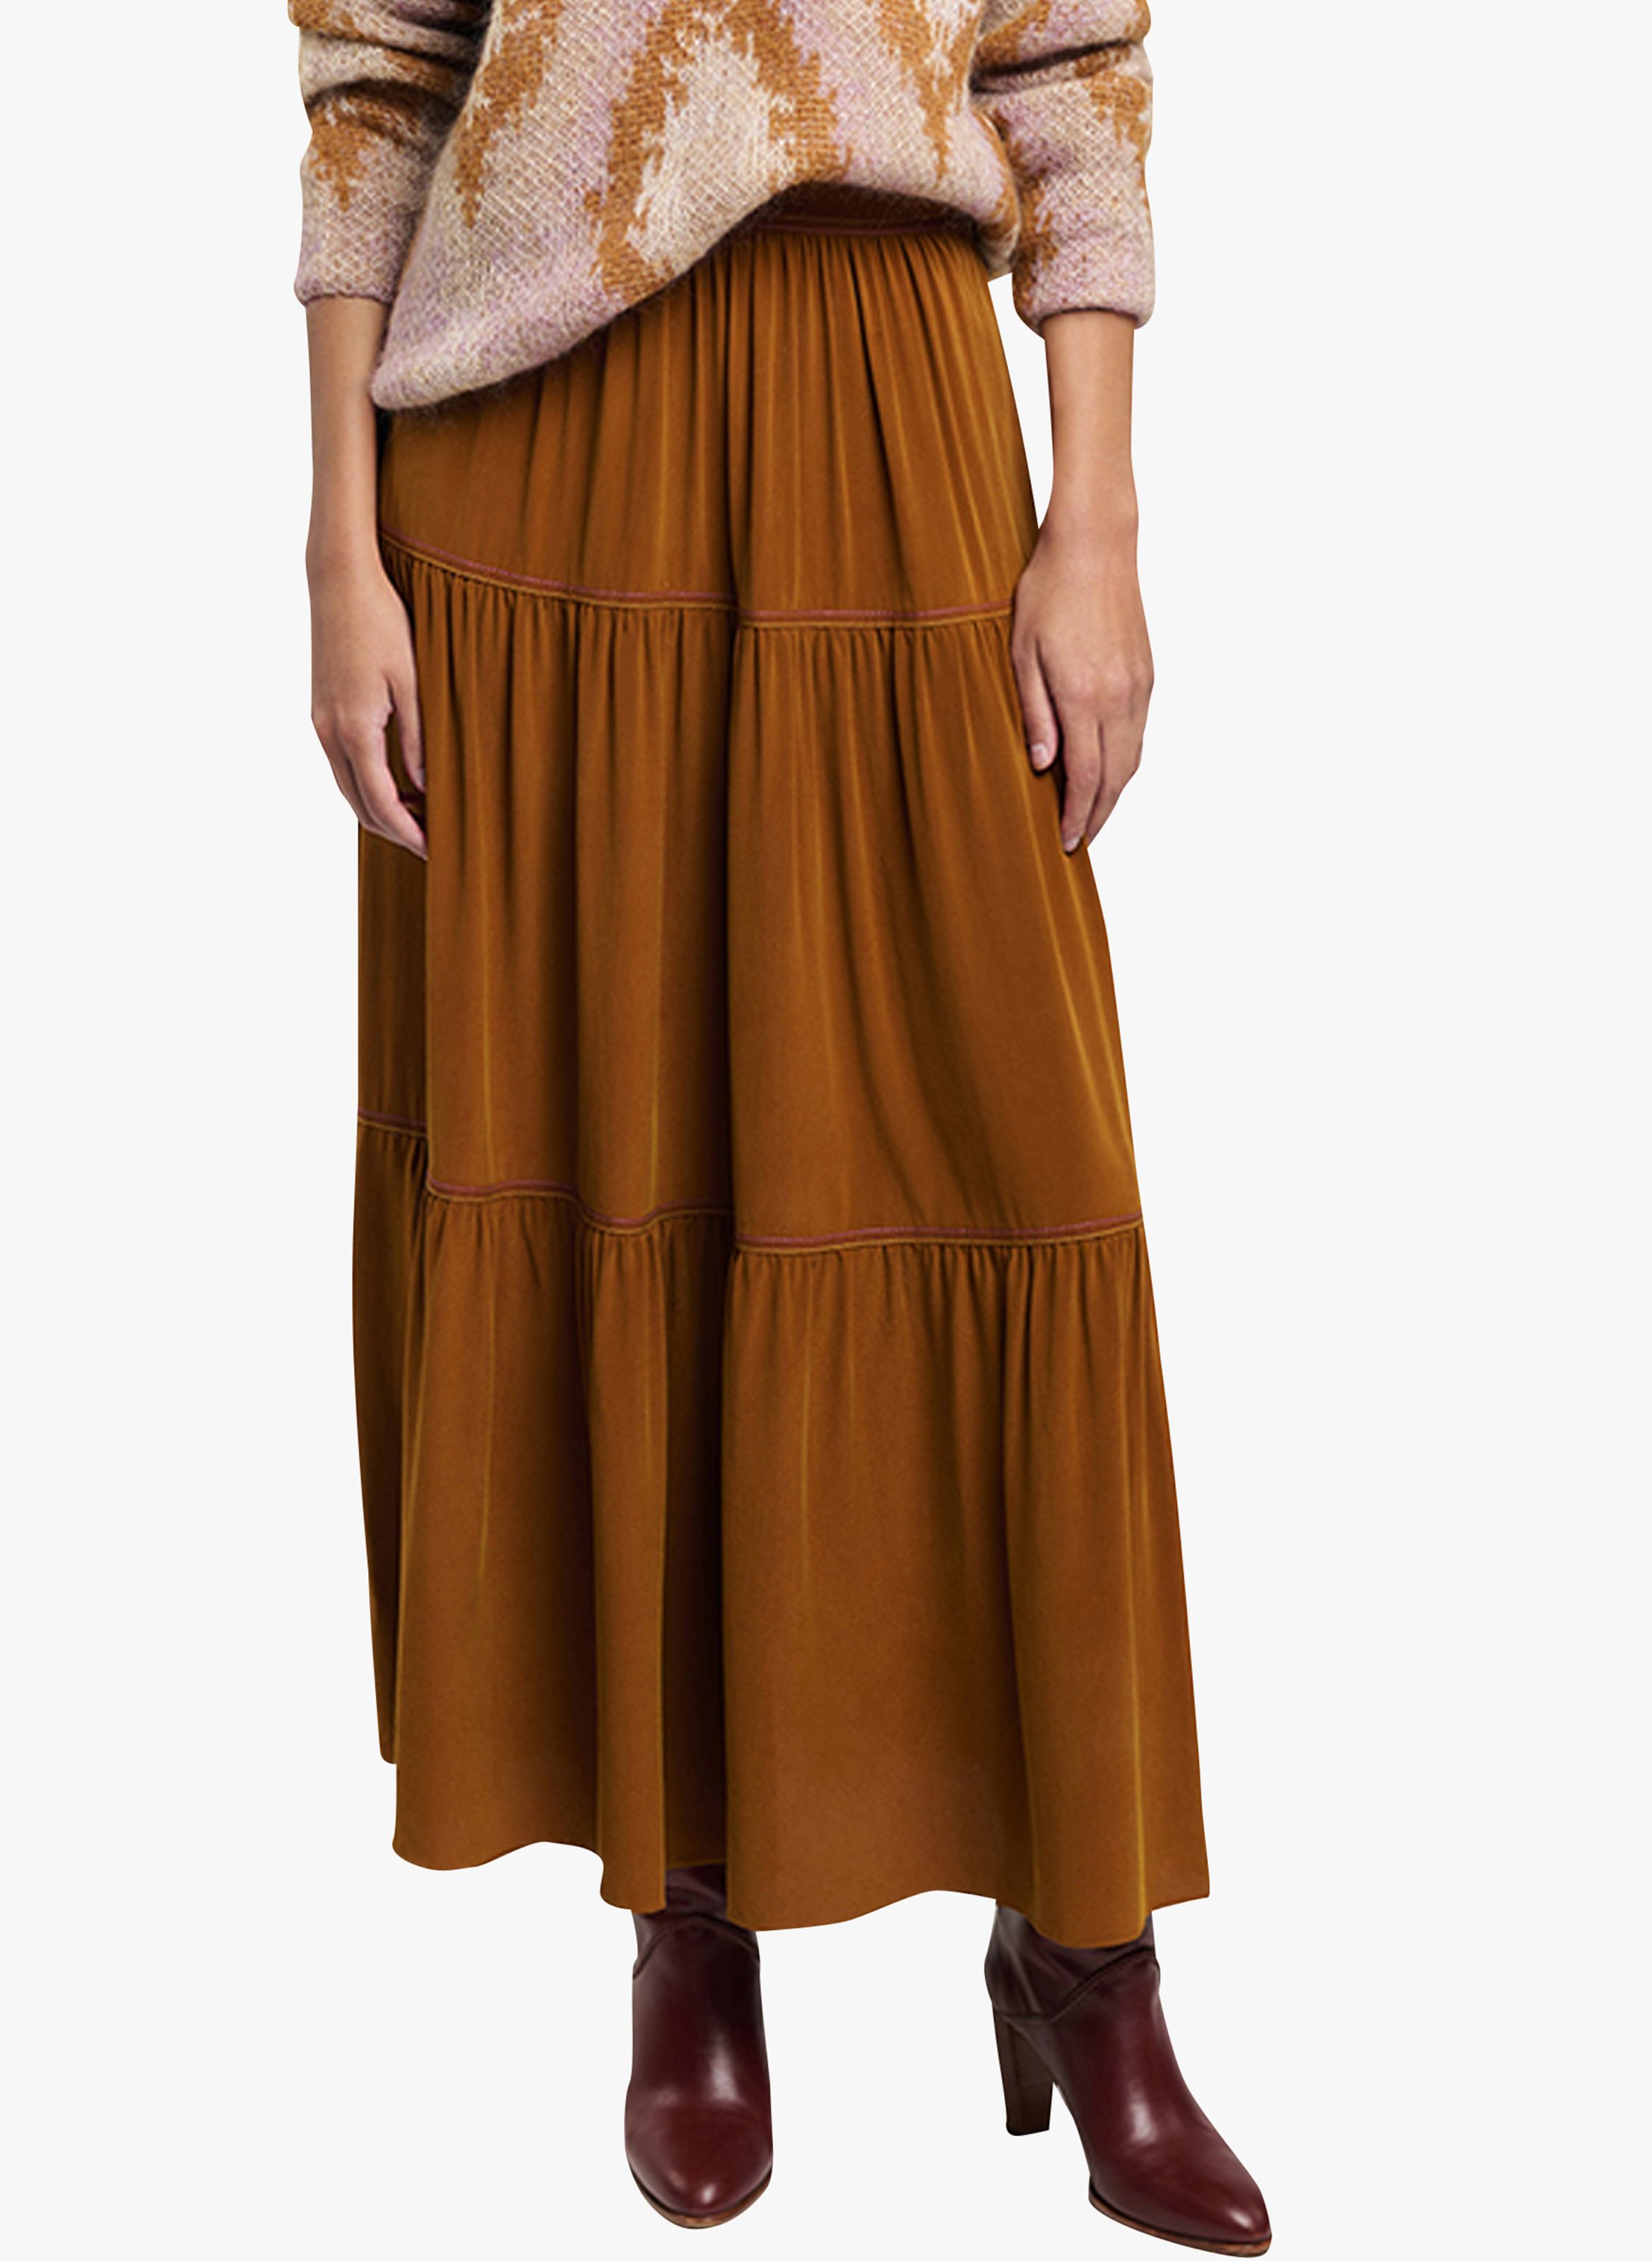 brown skirt for sale